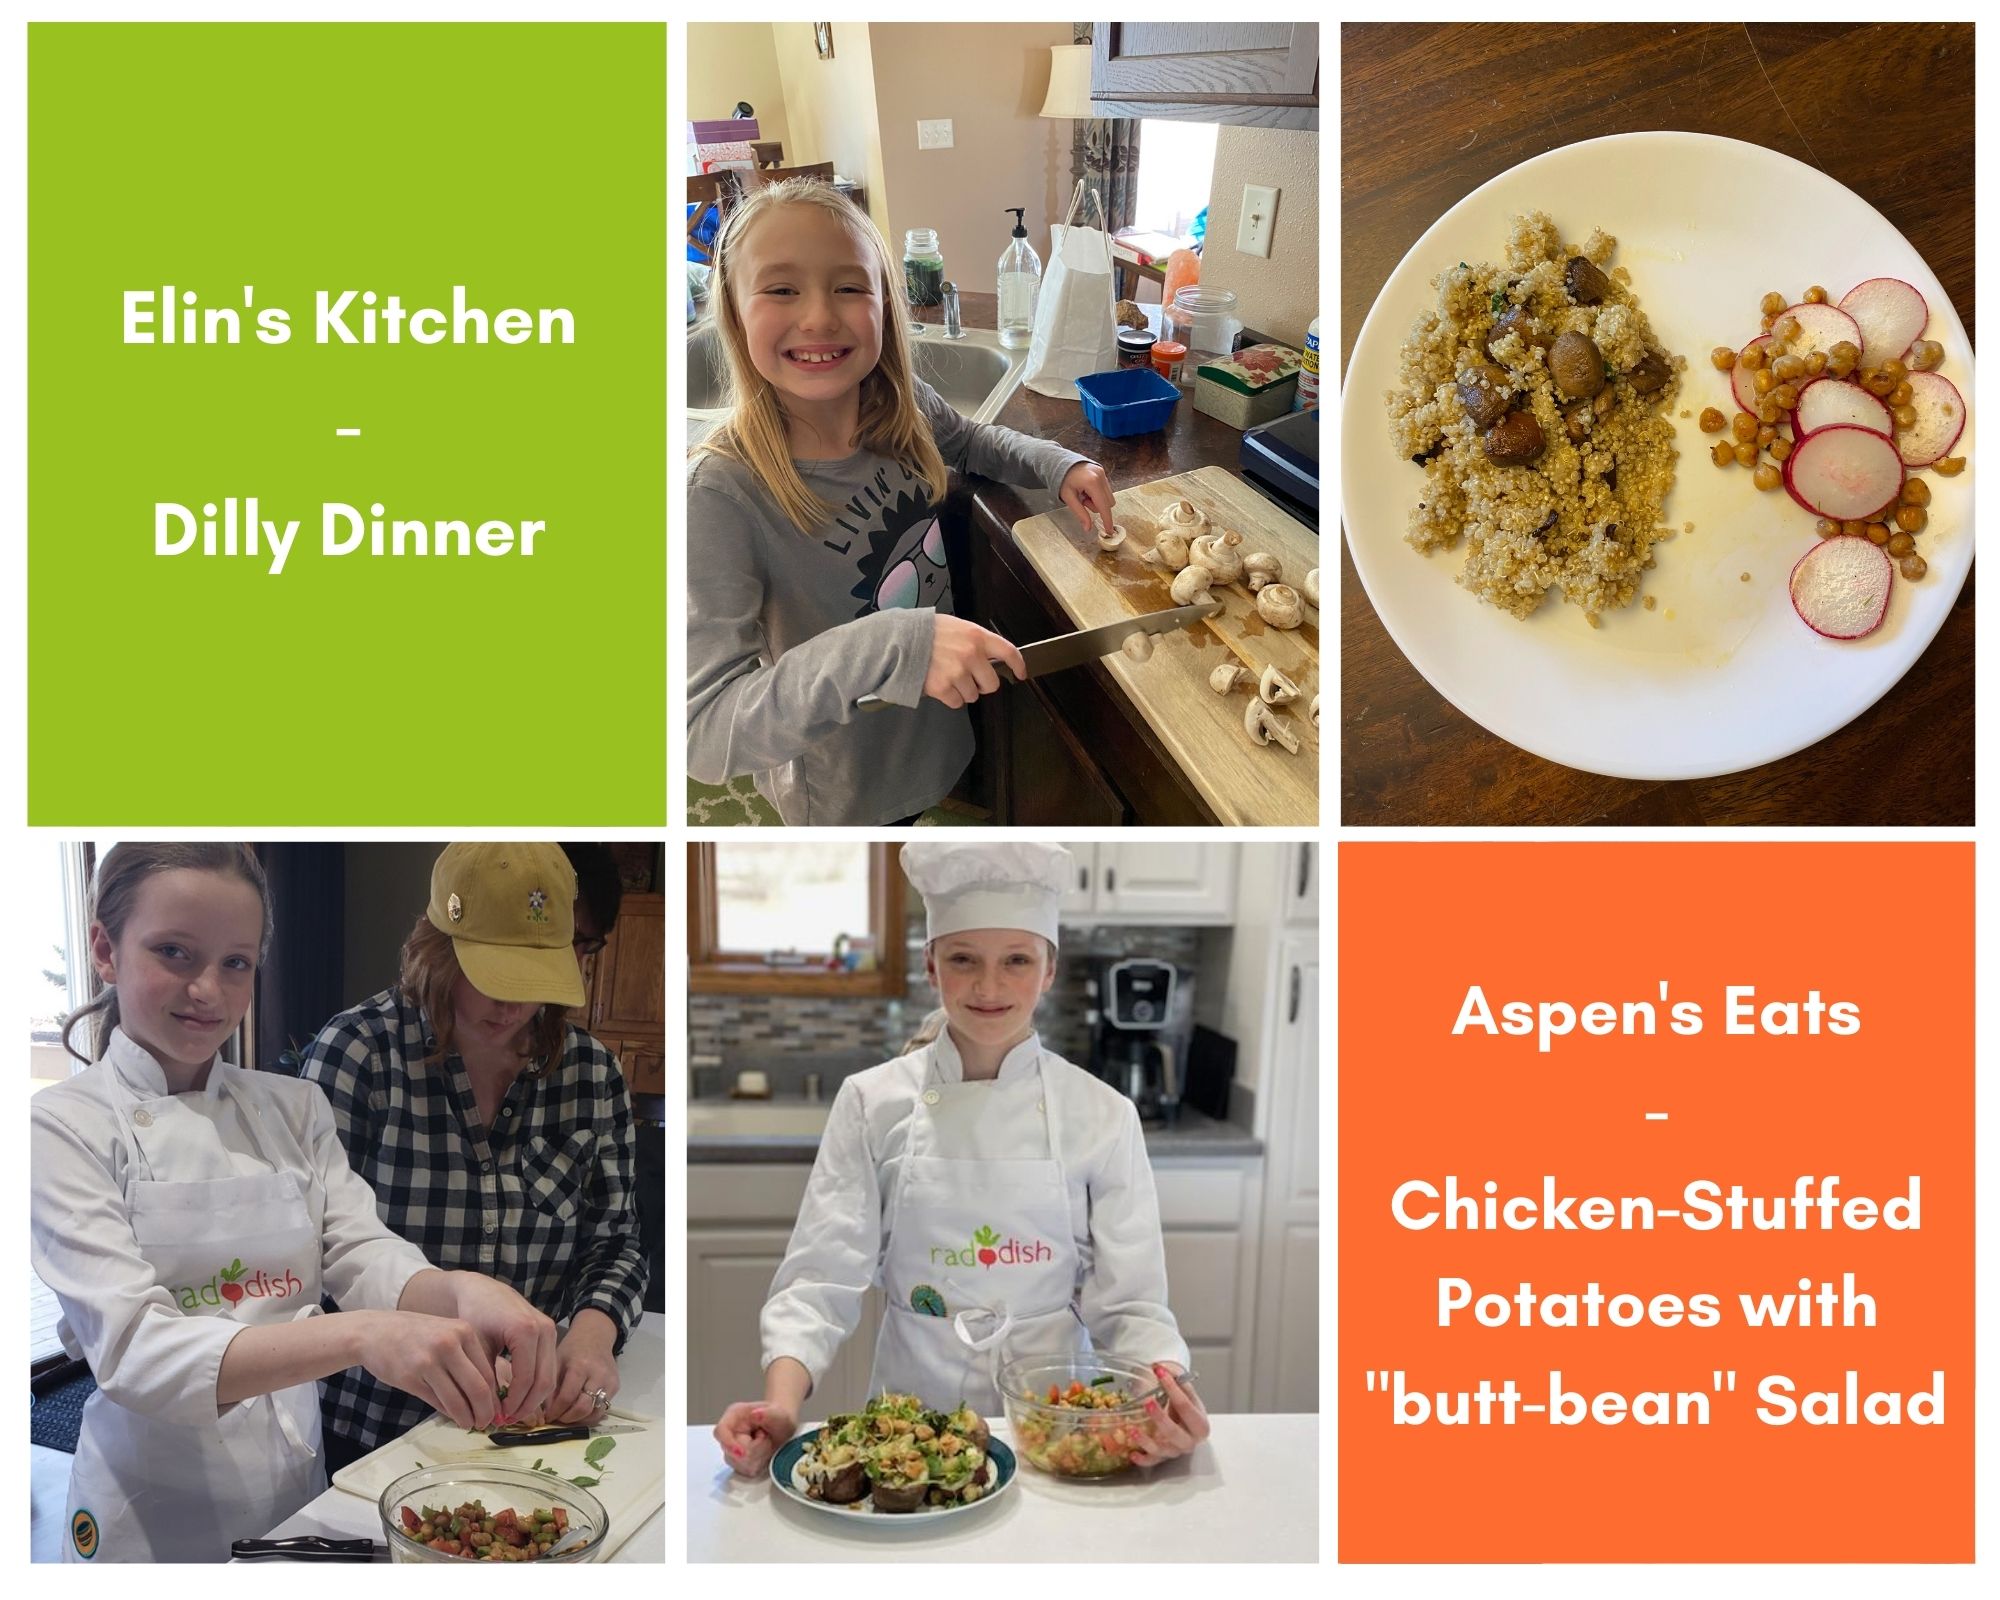 Elin's kitchen and Aspen's Eats